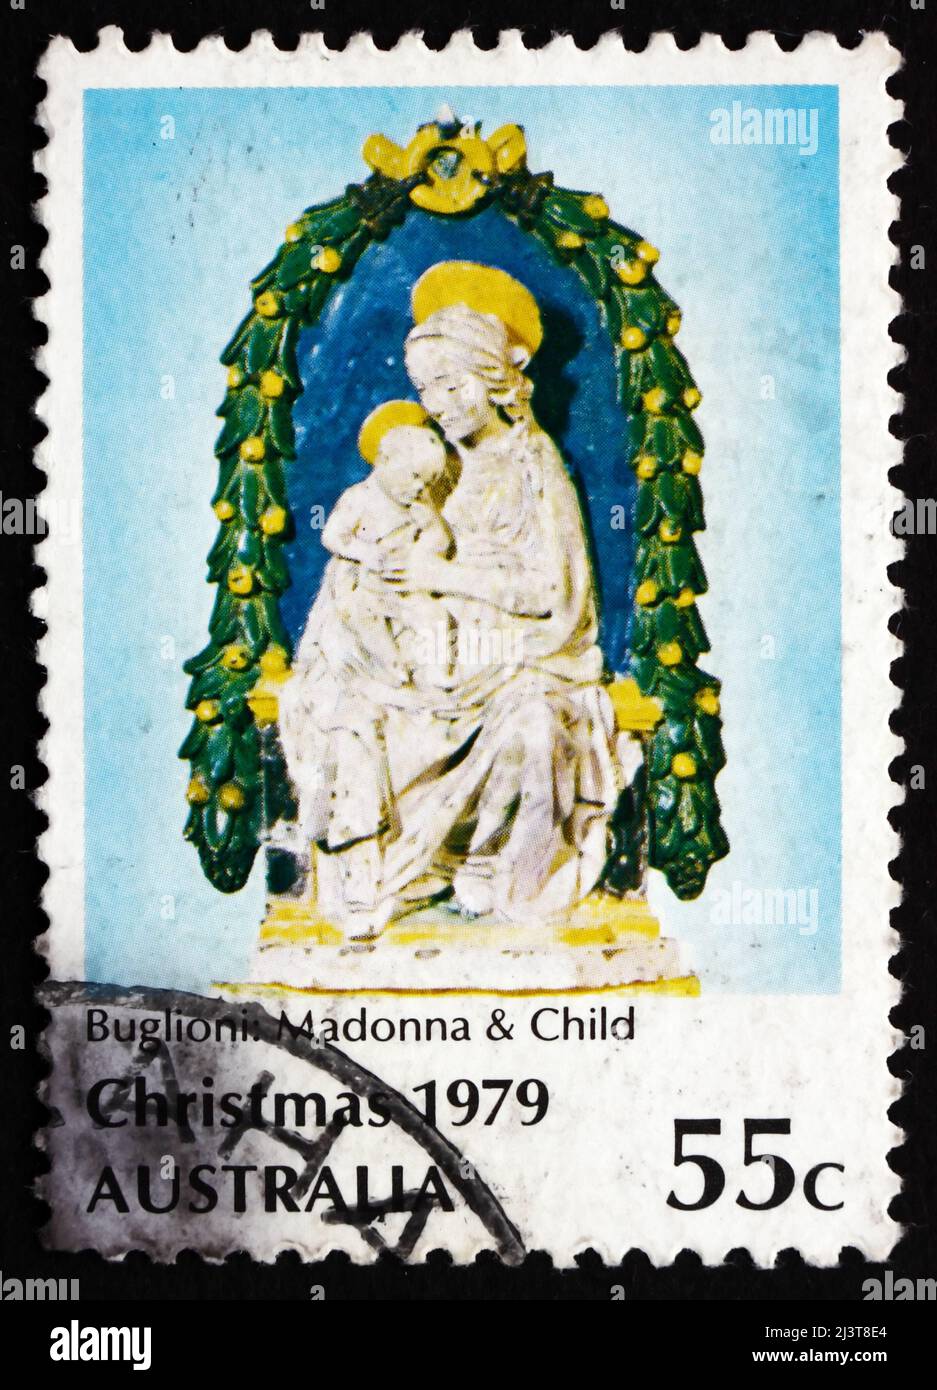 AUSTRALIA - CIRCA 1979: a stamp printed in the Australia shows Madonna and Child, by Buglioni, Christmas, circa 1979 Stock Photo